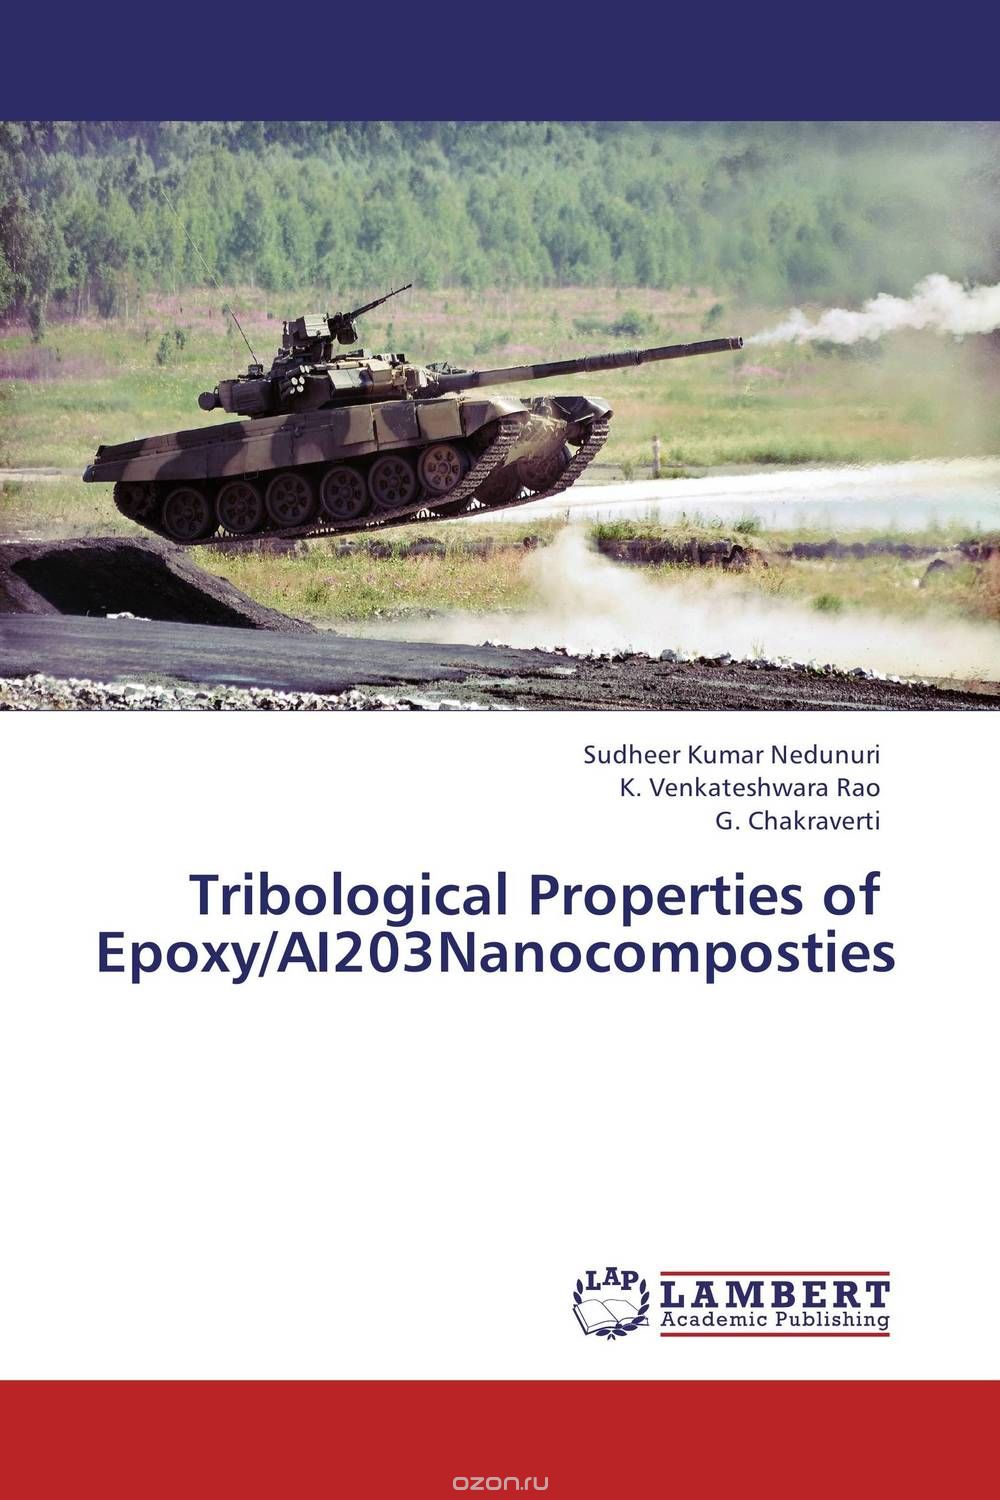 Скачать книгу "Tribological Properties of Epoxy/AI203Nanocomposties"